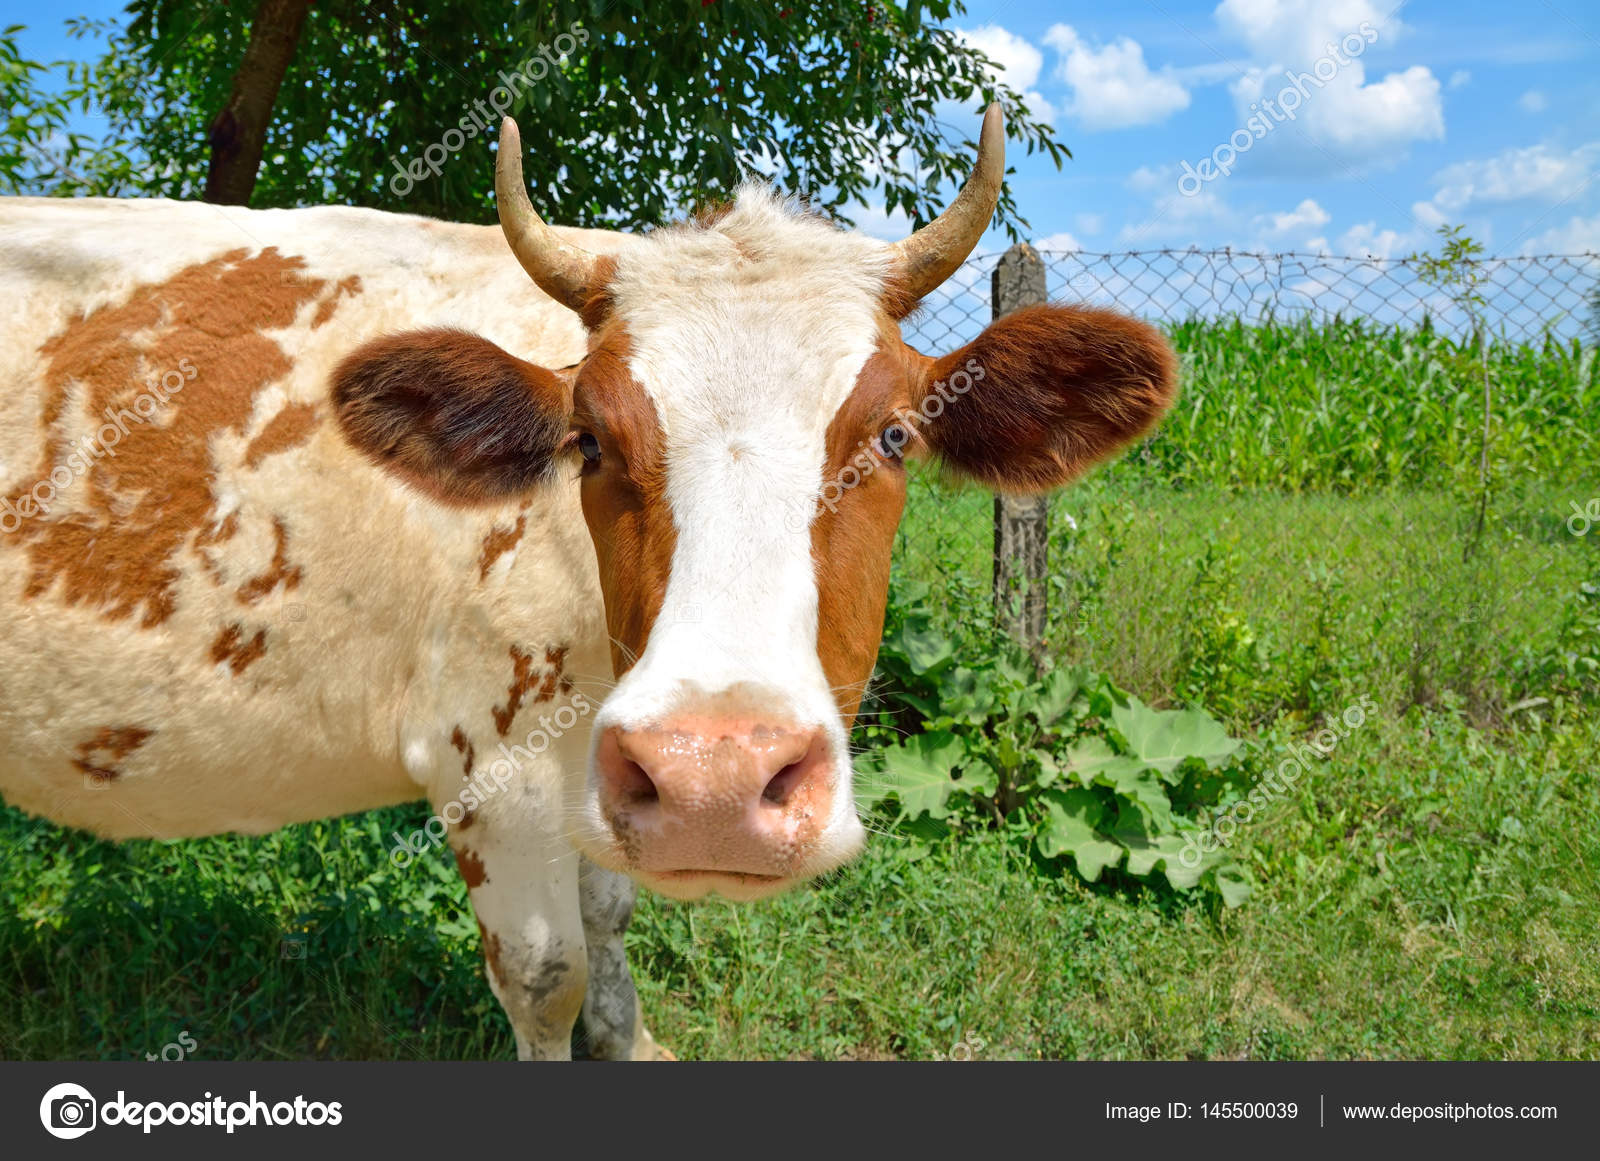 https://st3.depositphotos.com/1819486/14550/i/1600/depositphotos_145500039-stock-photo-cow-looks-into-camera.jpg